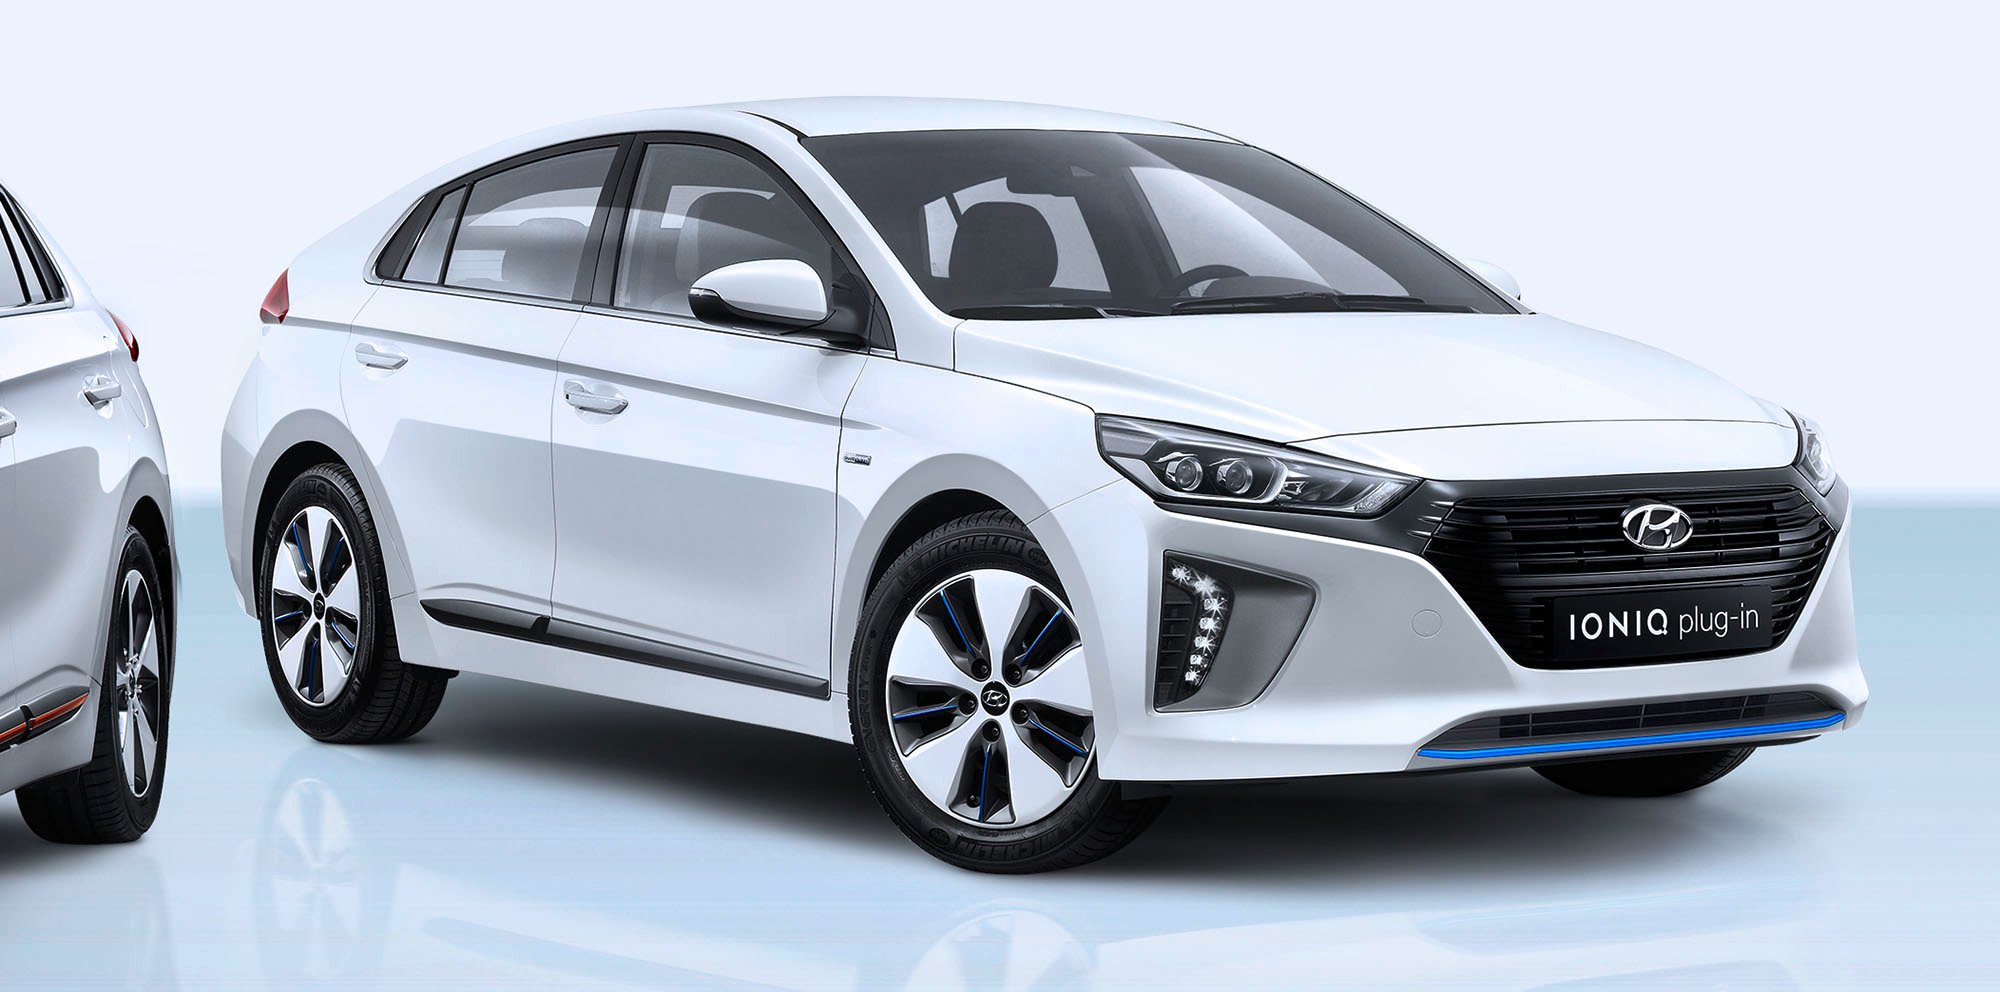 2017 Hyundai Ioniq plugin hybrid and Electric unveiled Photos (1 of 4)